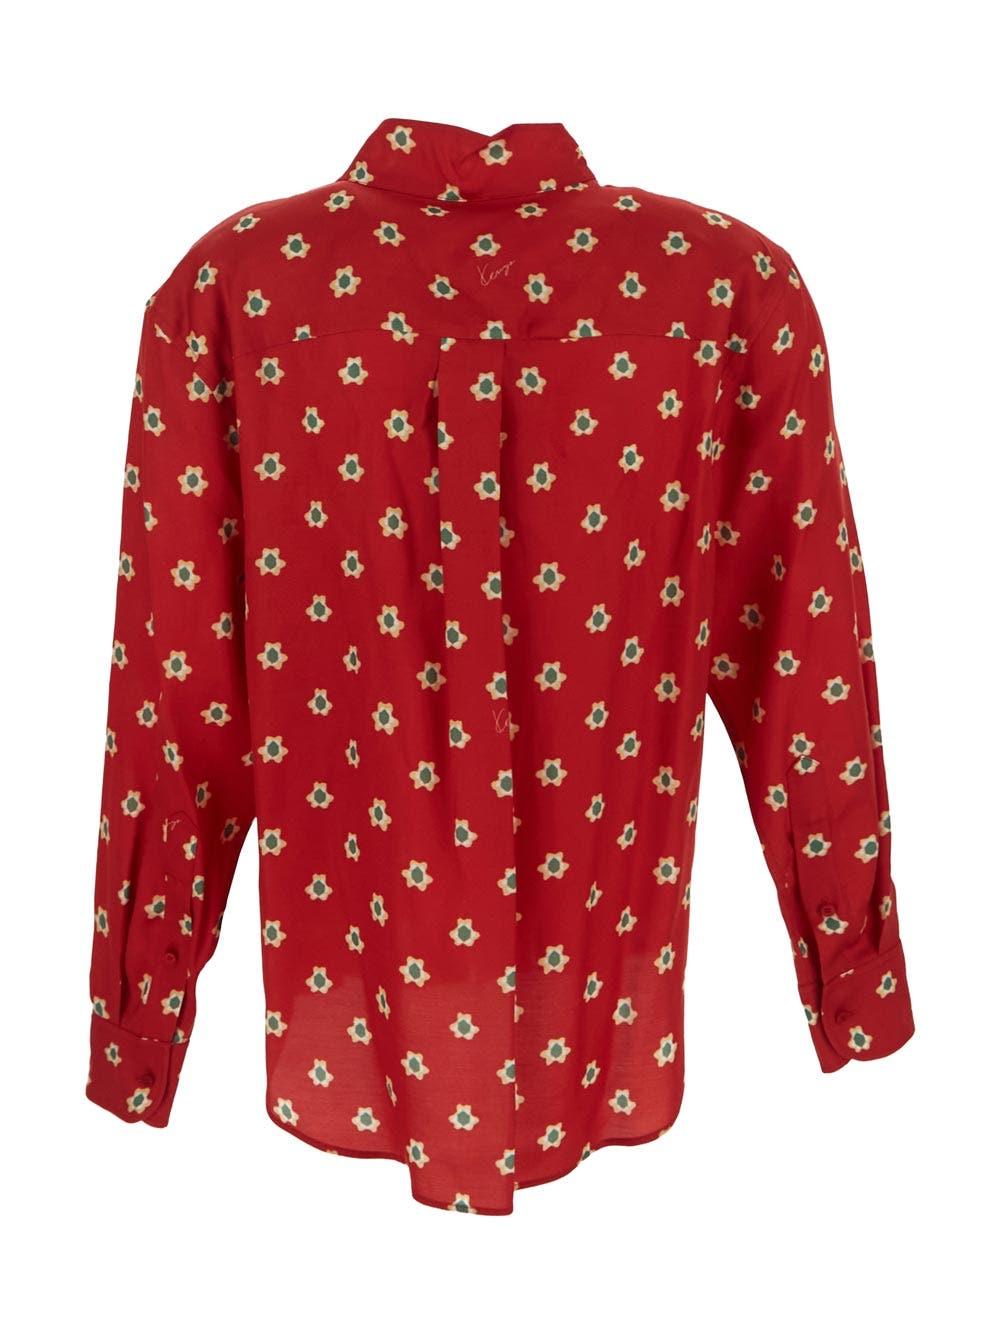 KENZO Teddy Flower Shirt in Red | Lyst